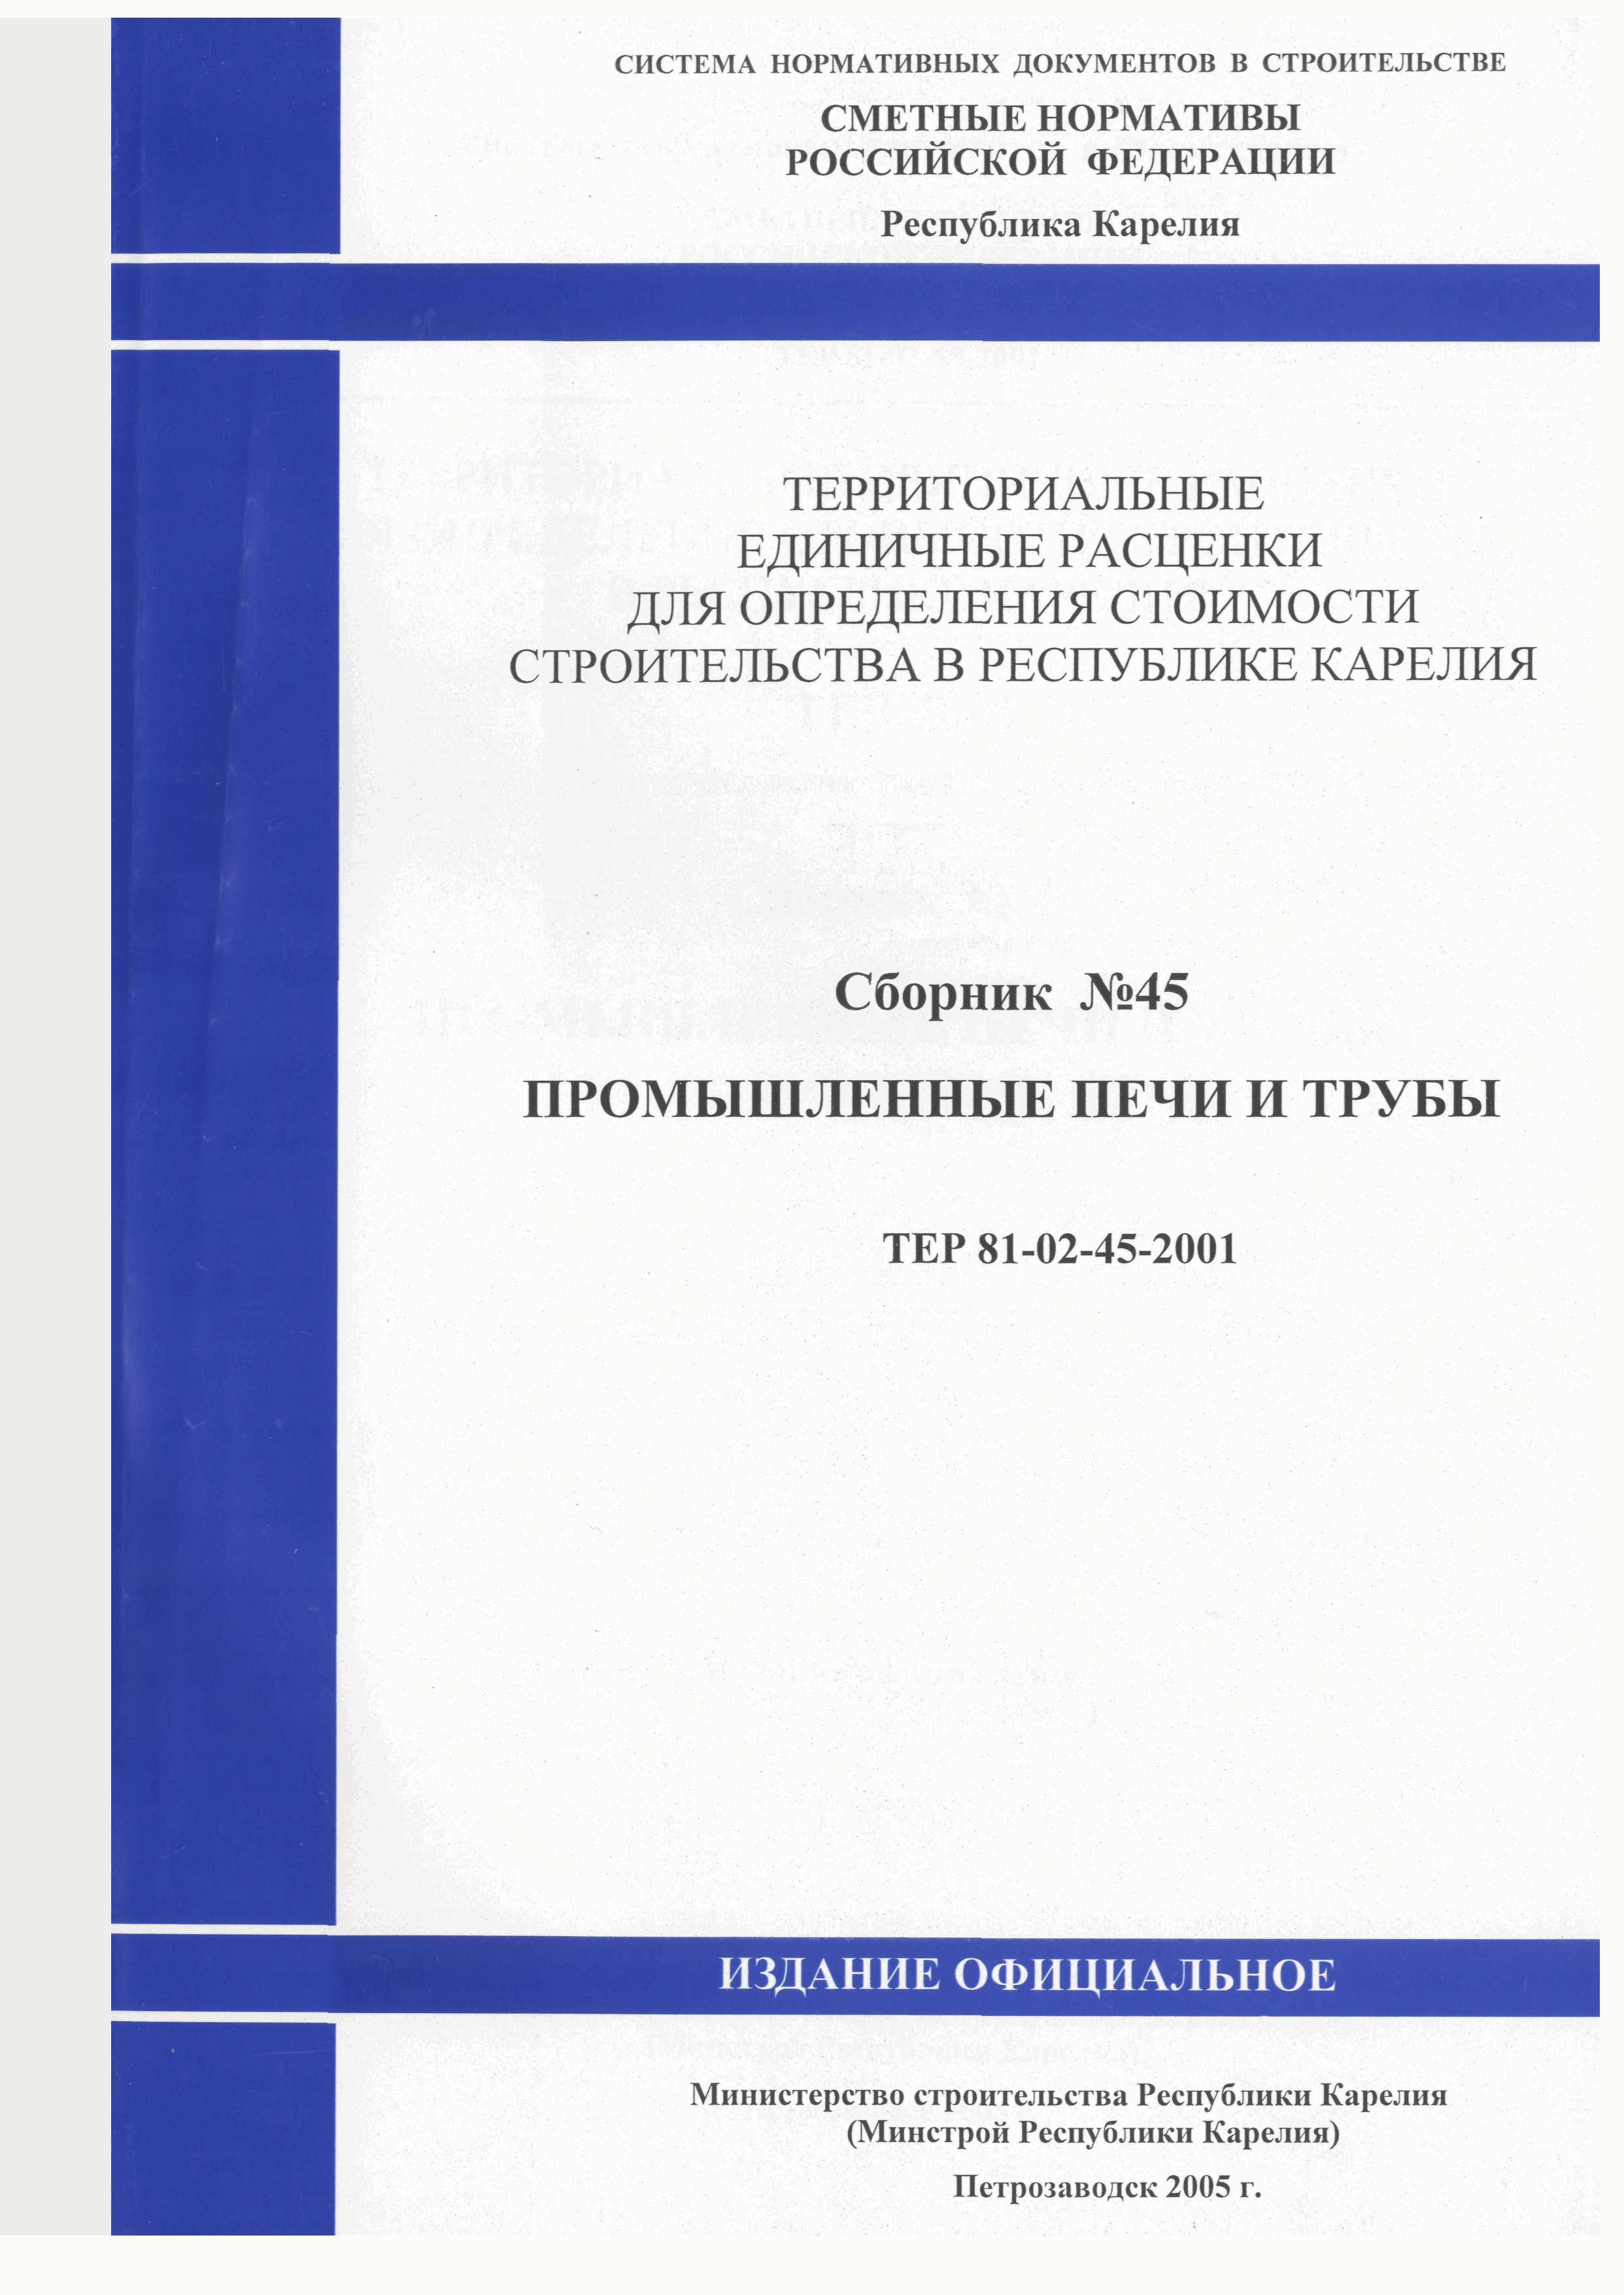 ТЕР Республика Карелия 2001-45